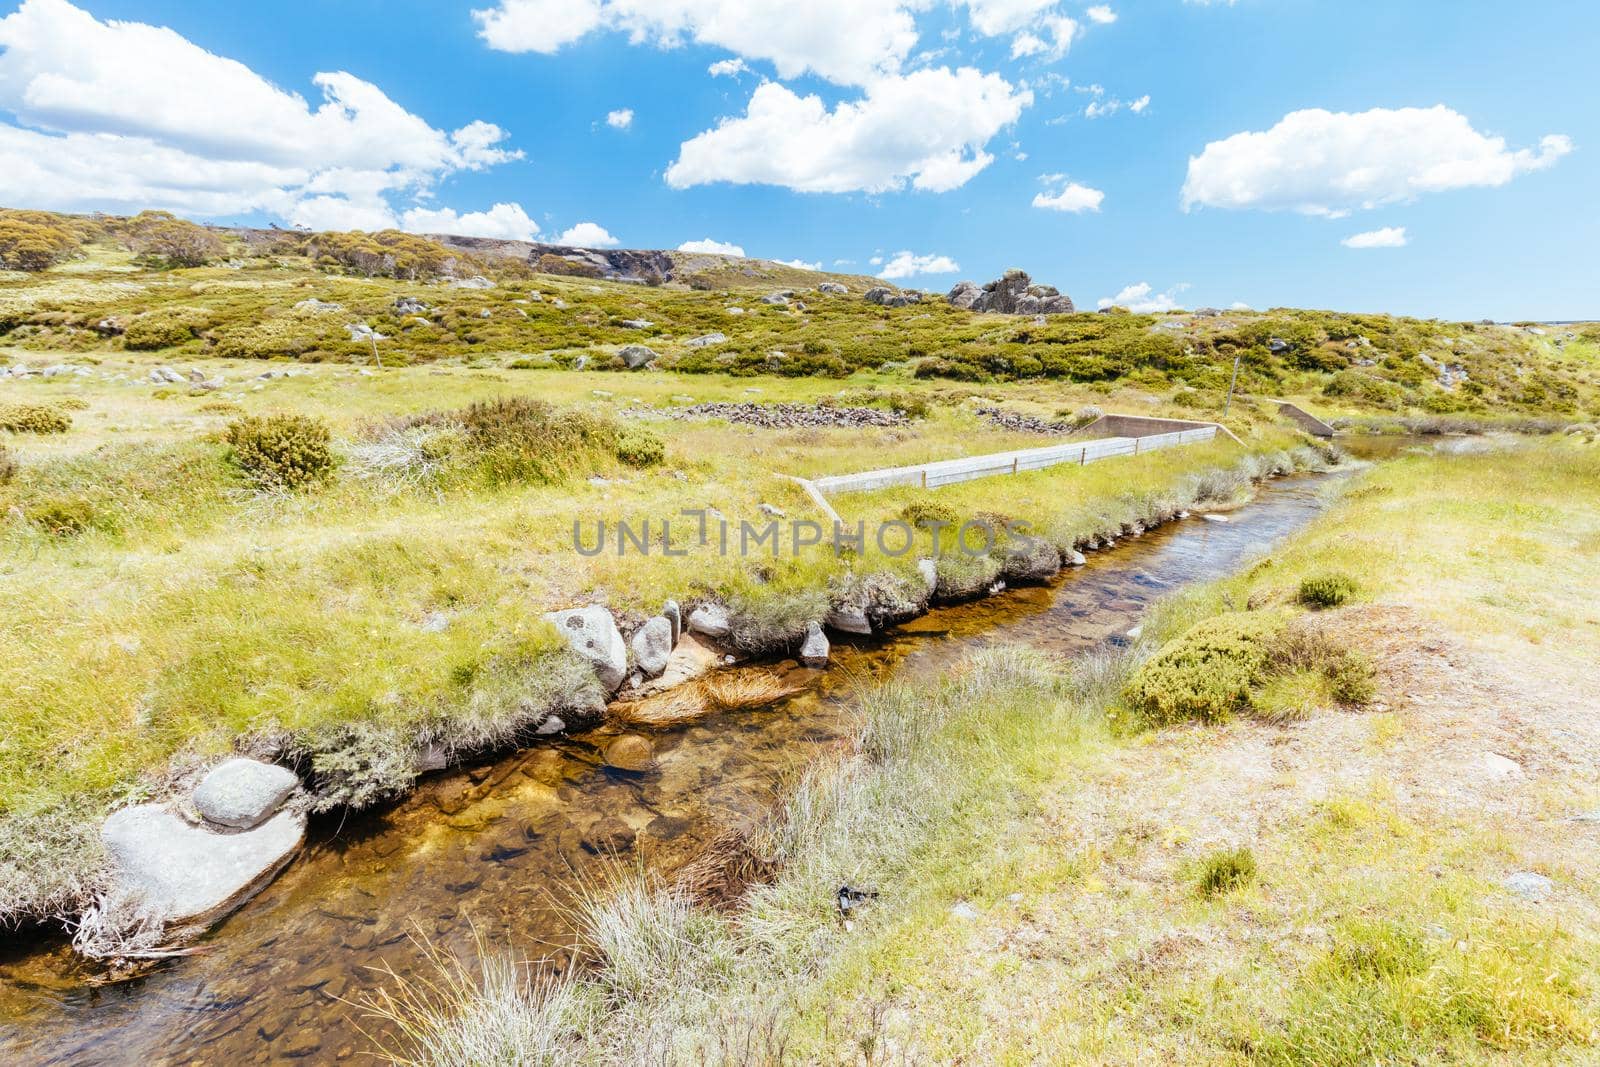 Landscape around the Langford Gap trailhead near Falls Creek in the Victorian Alps, Australia